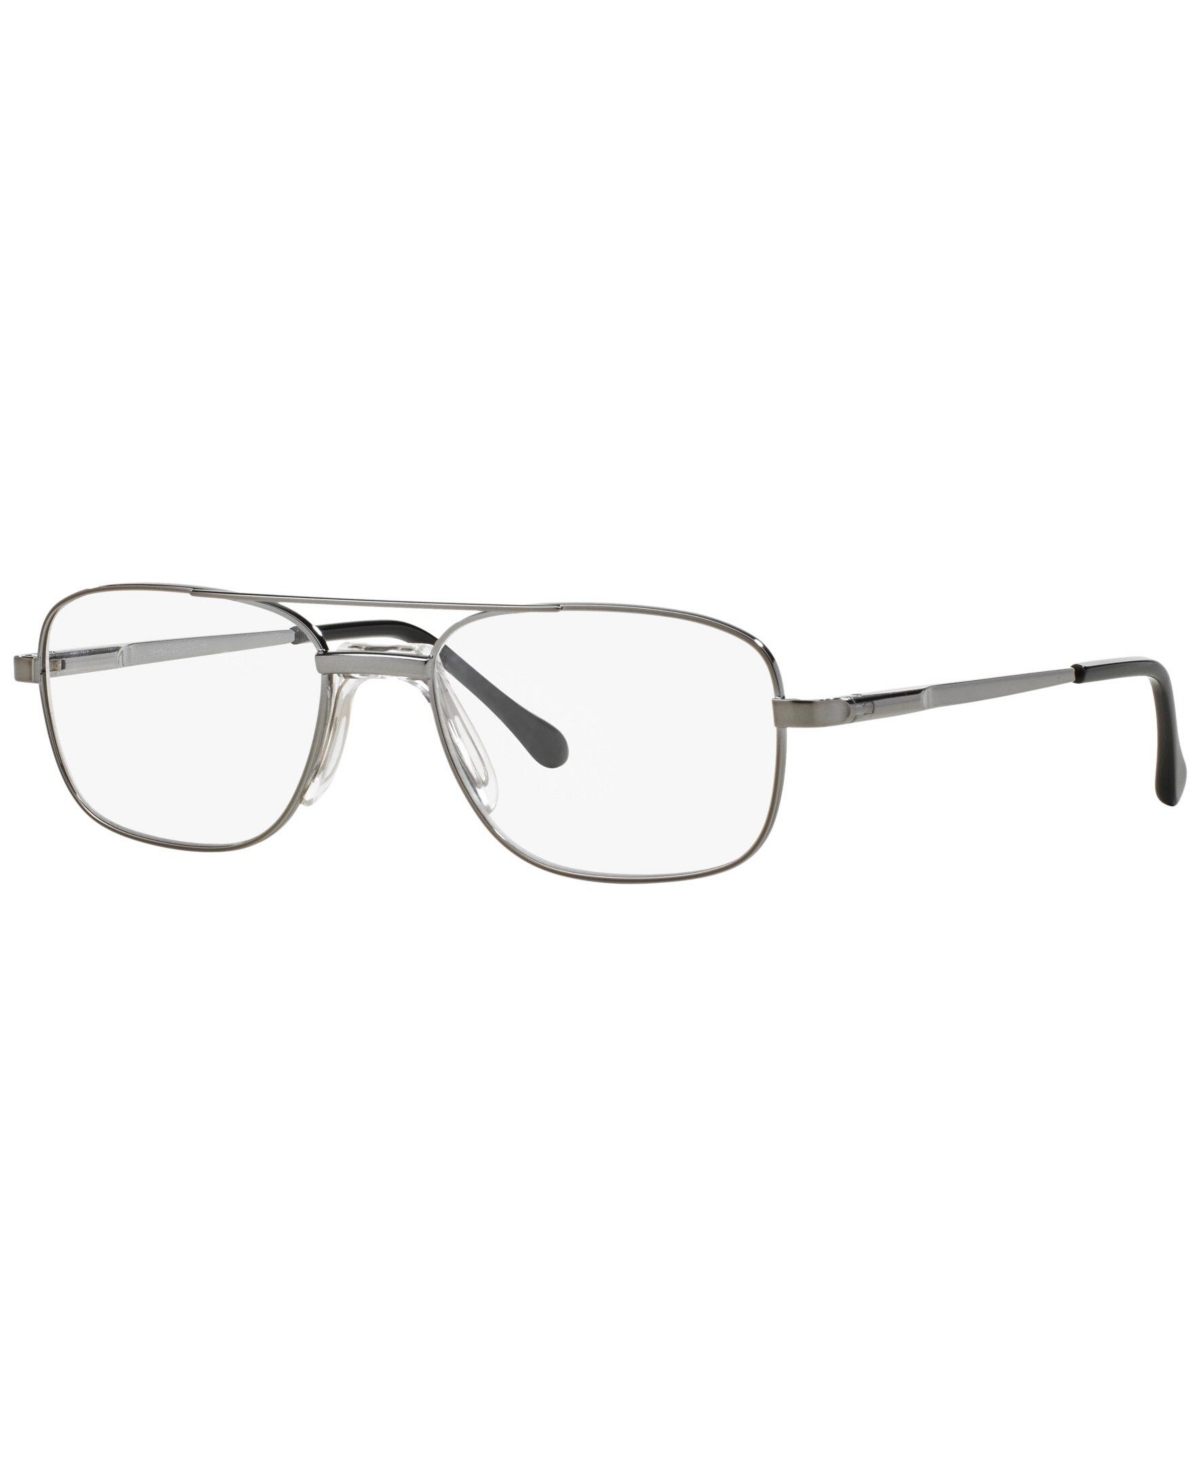 SF2268 Men's Square Eyeglasses - Gunmetal